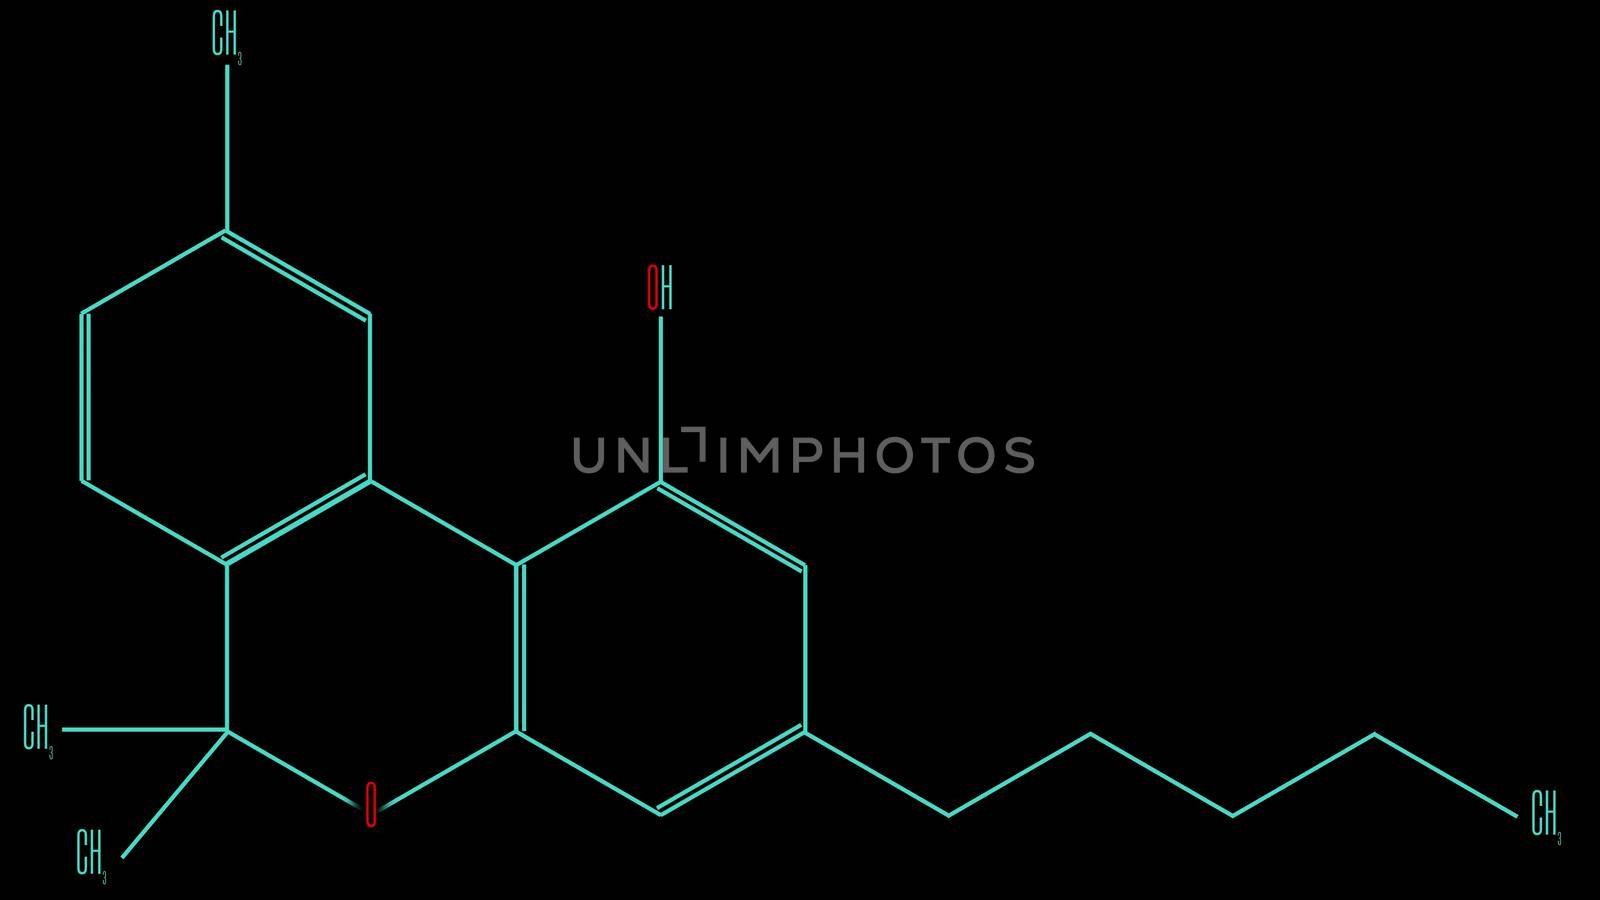 Structural formula of the cannabinol molecule. Black background